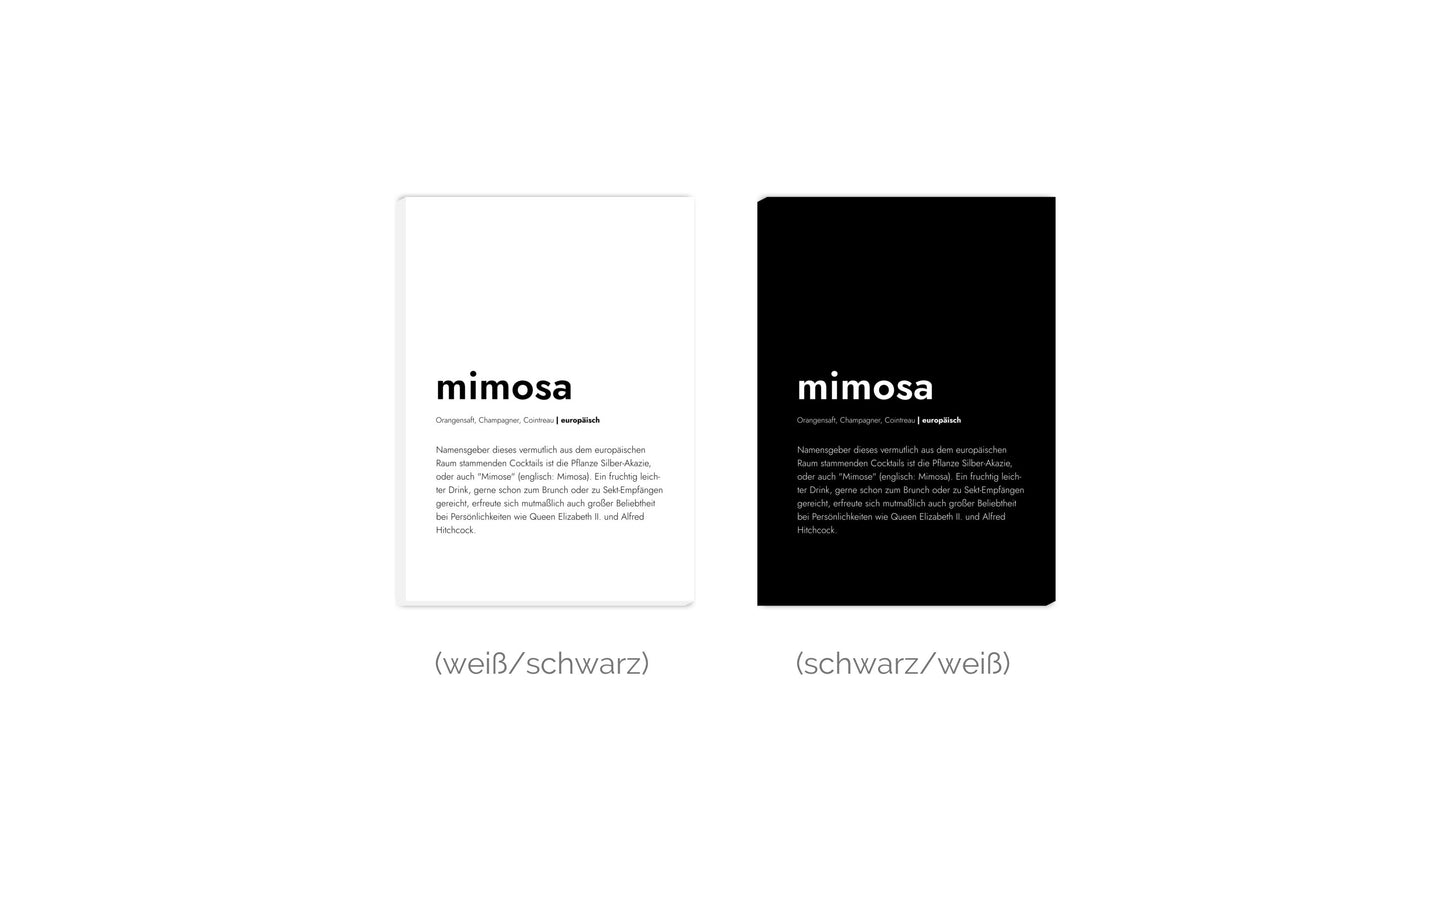 Leinwand Mimosa - Definition